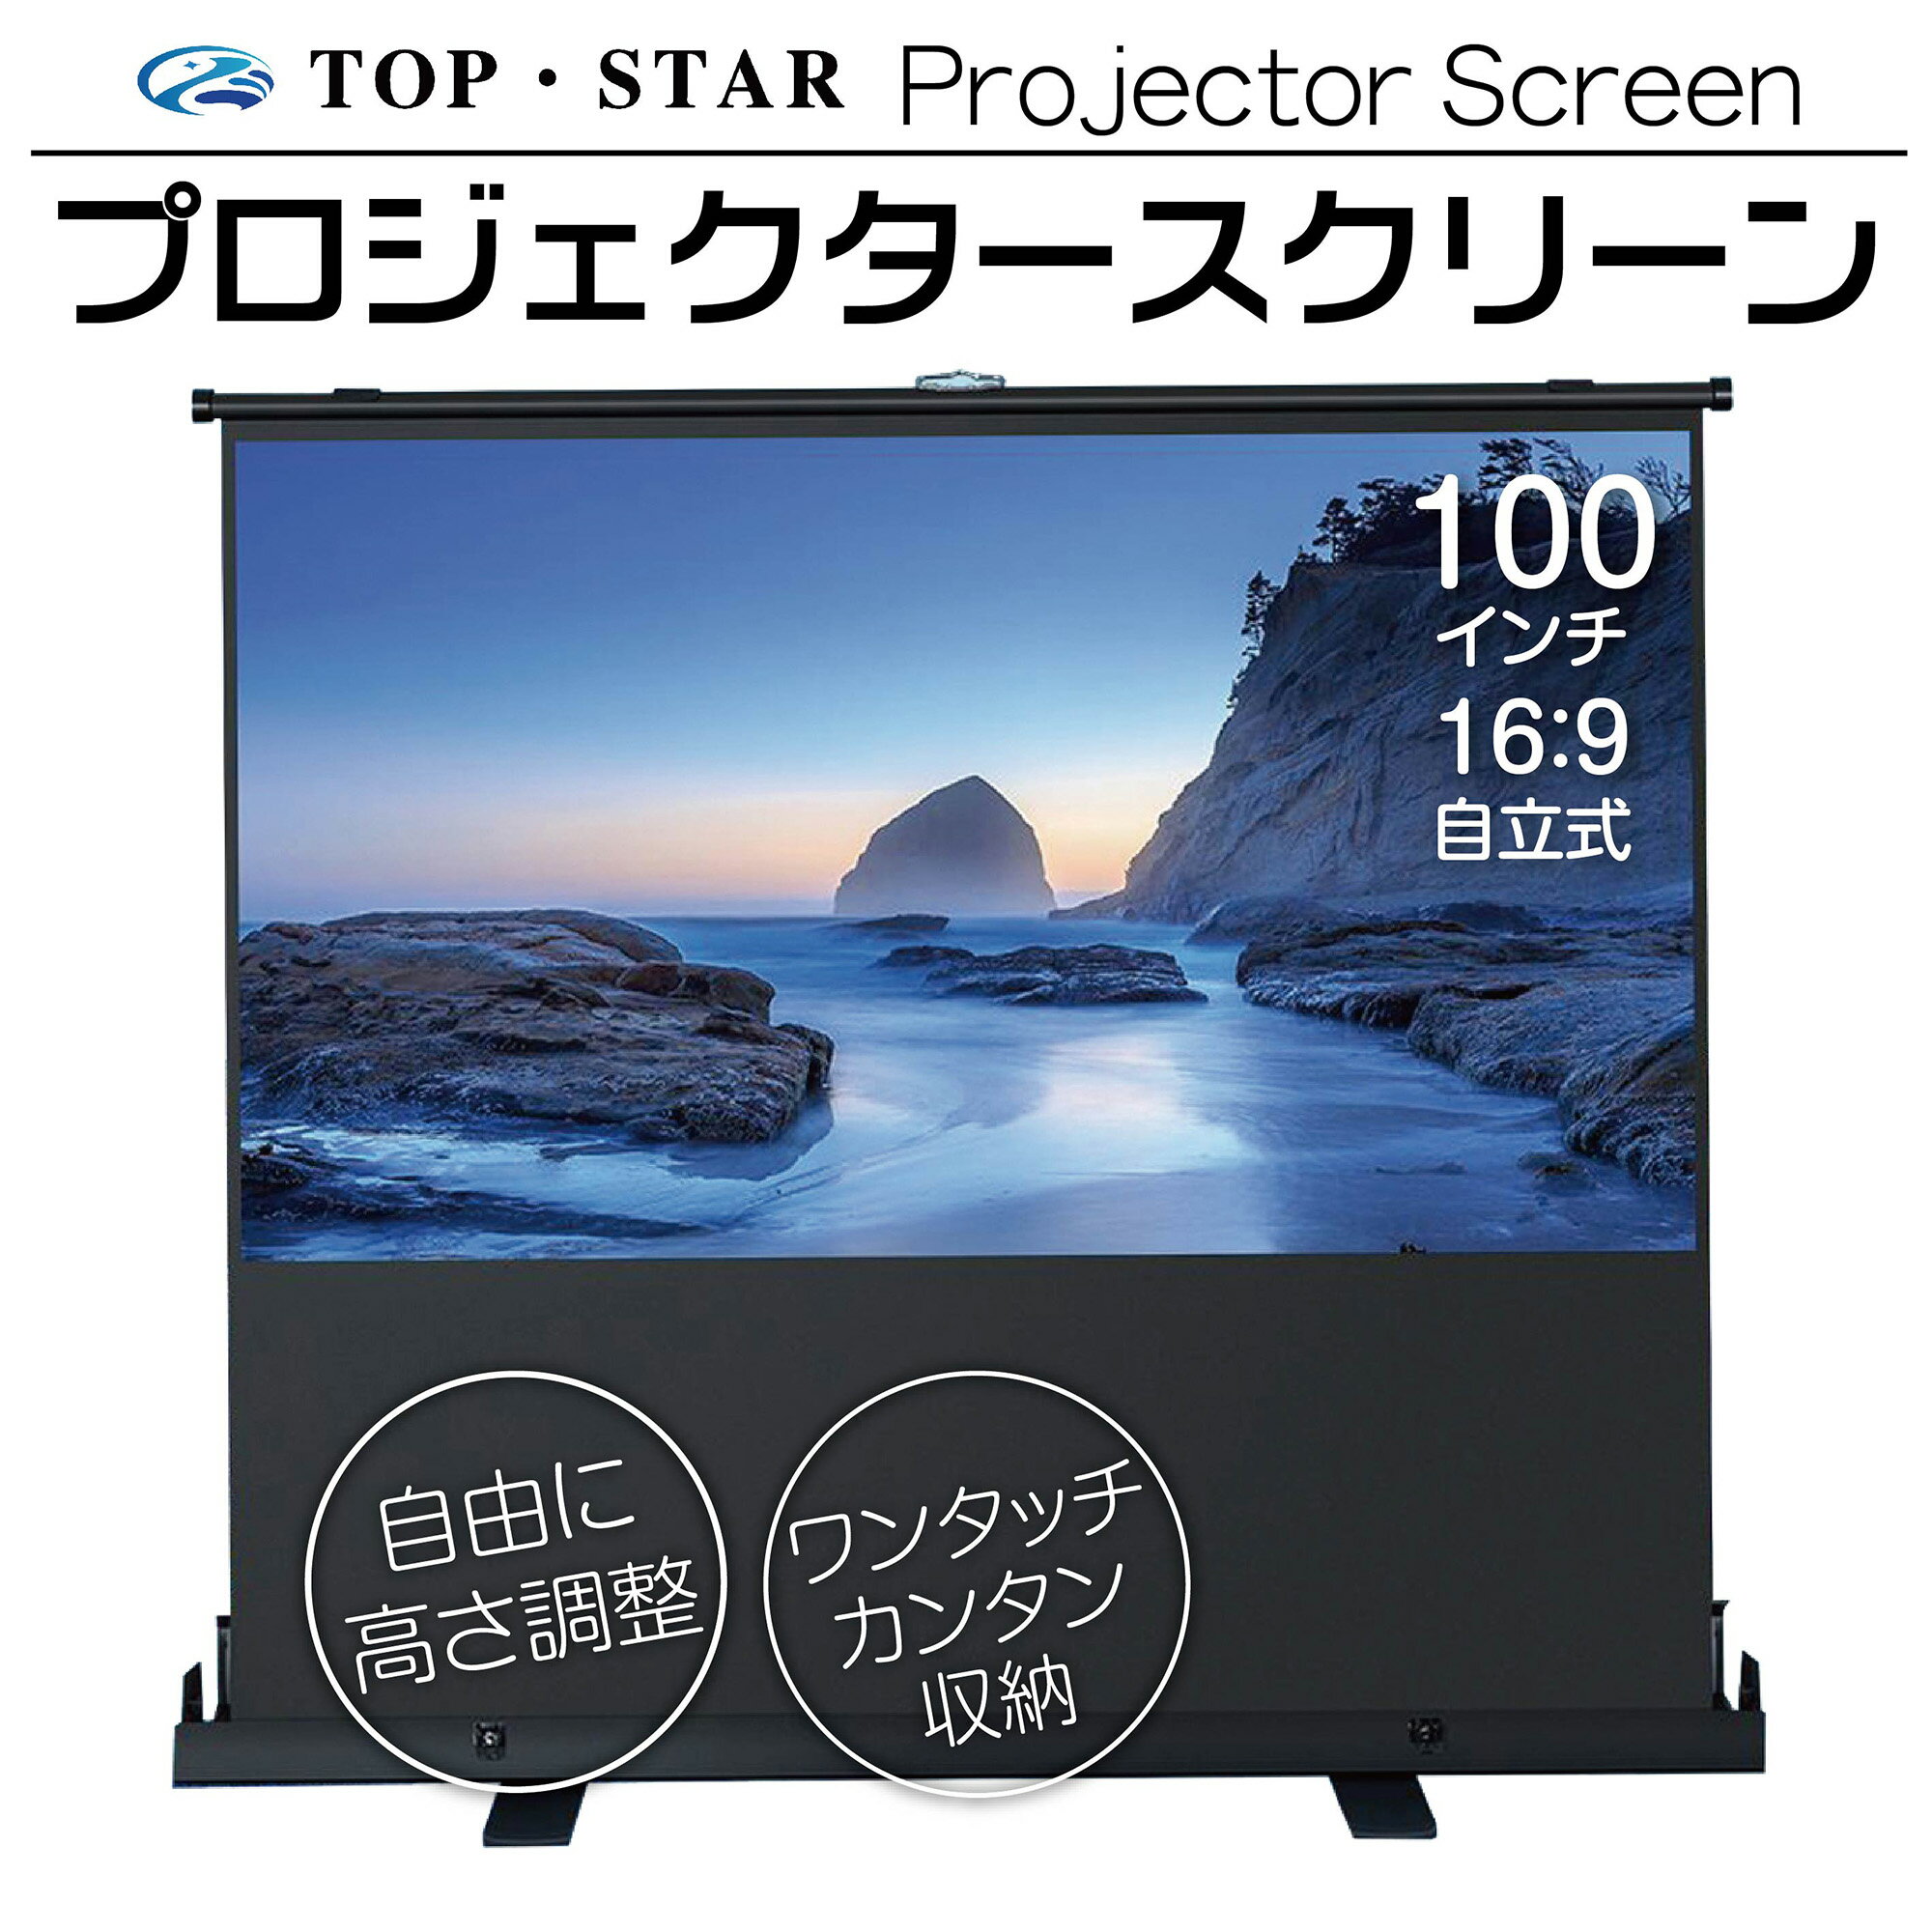 TOP・STAR プロジェクタースクリーン 100インチ 1